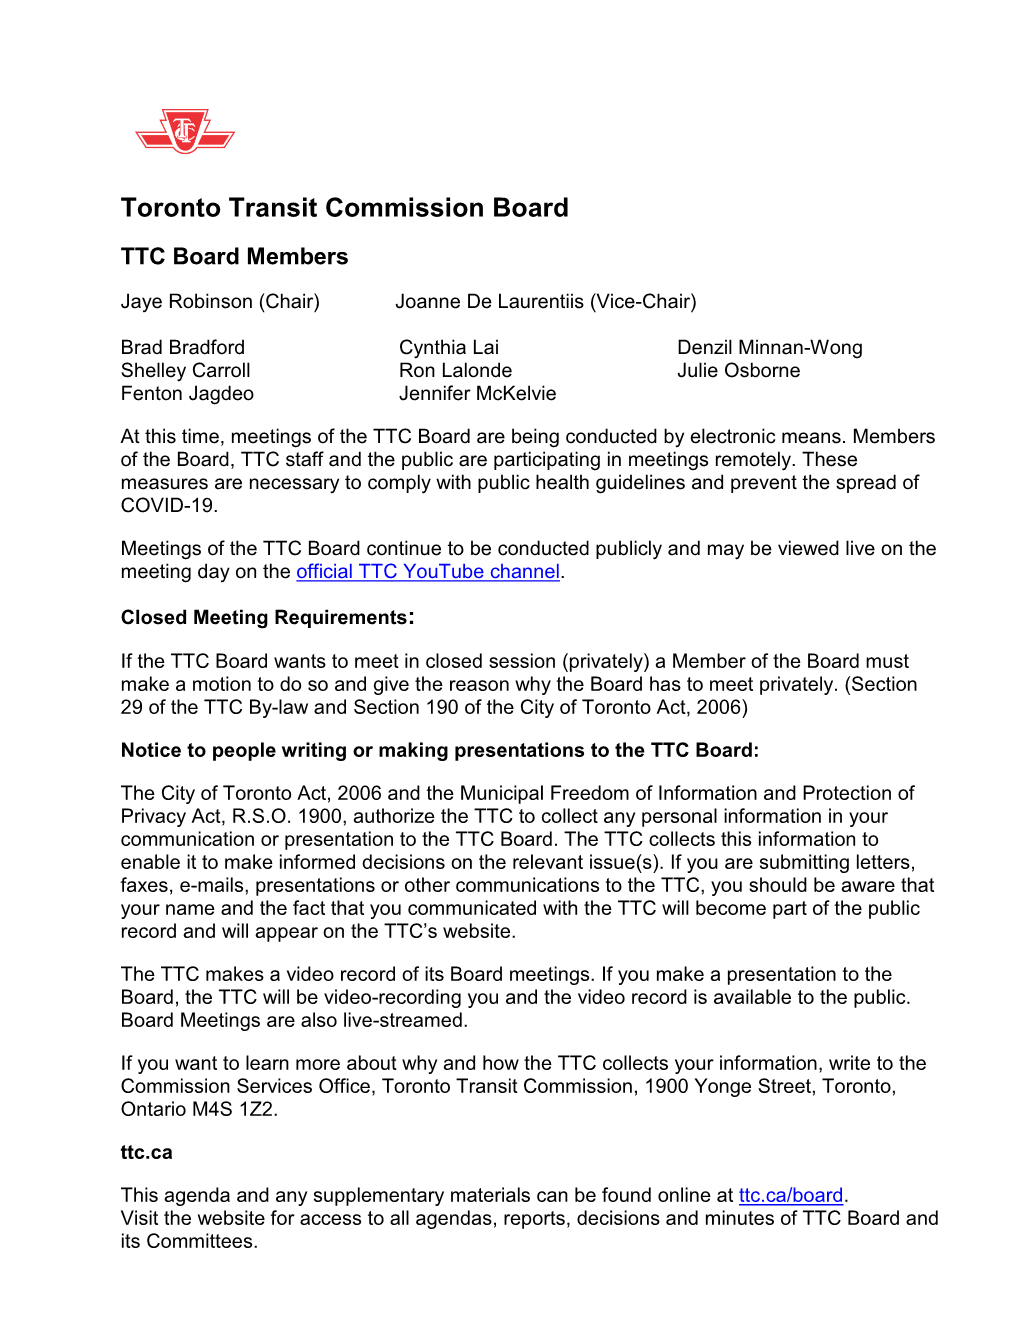 Toronto Transit Commission Board TTC Board Members